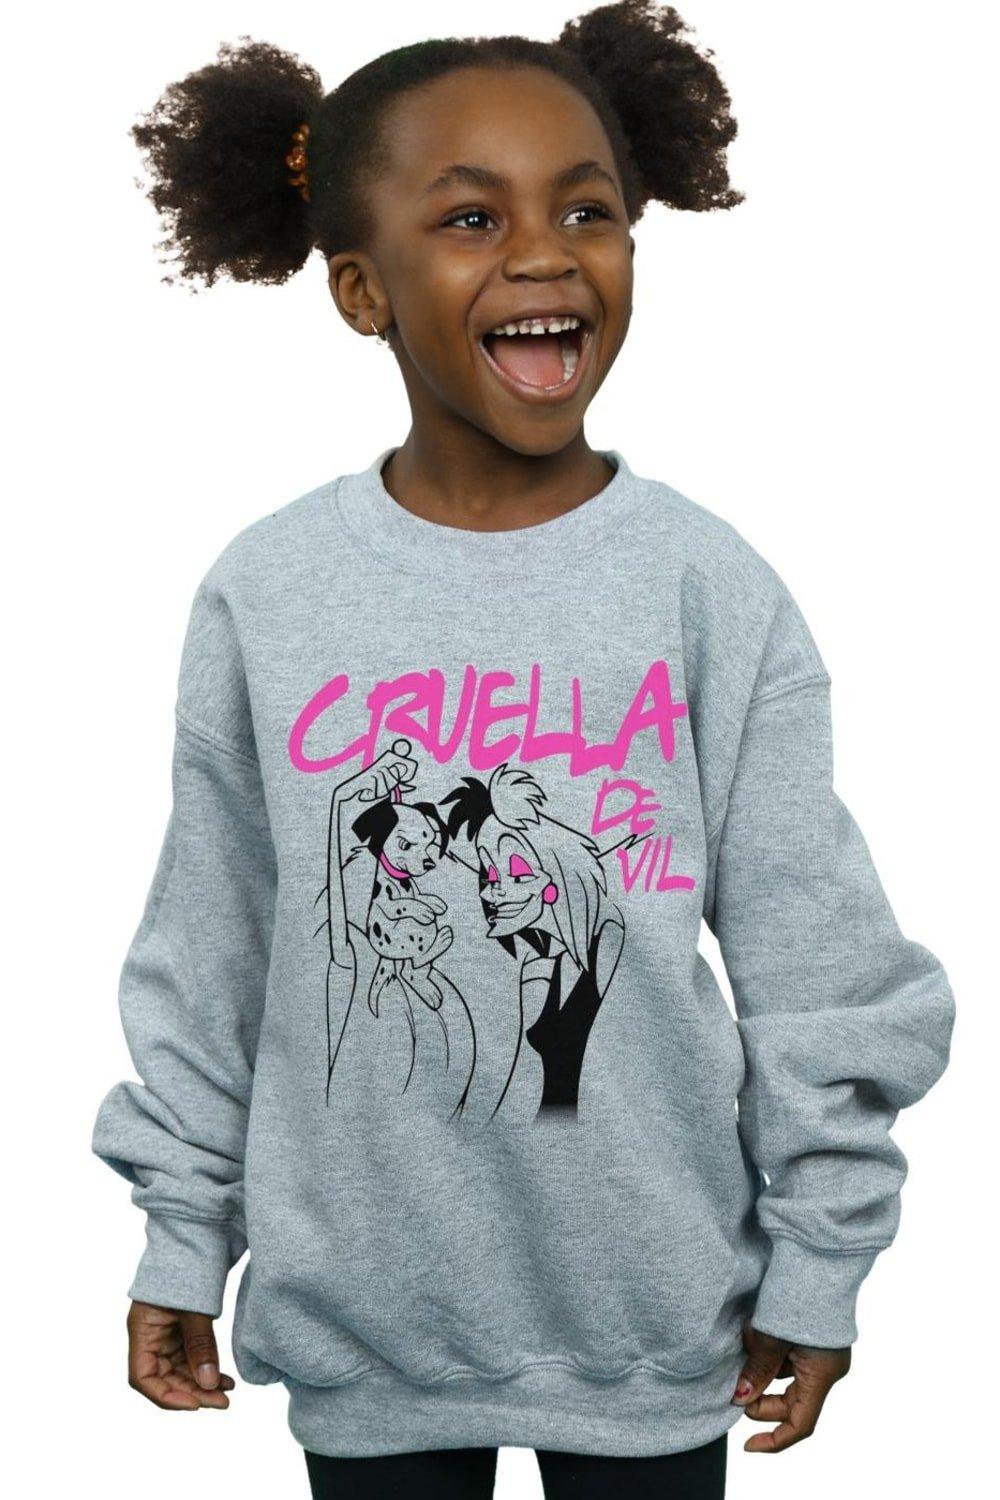 Cruella De Vil Collared Sweatshirt